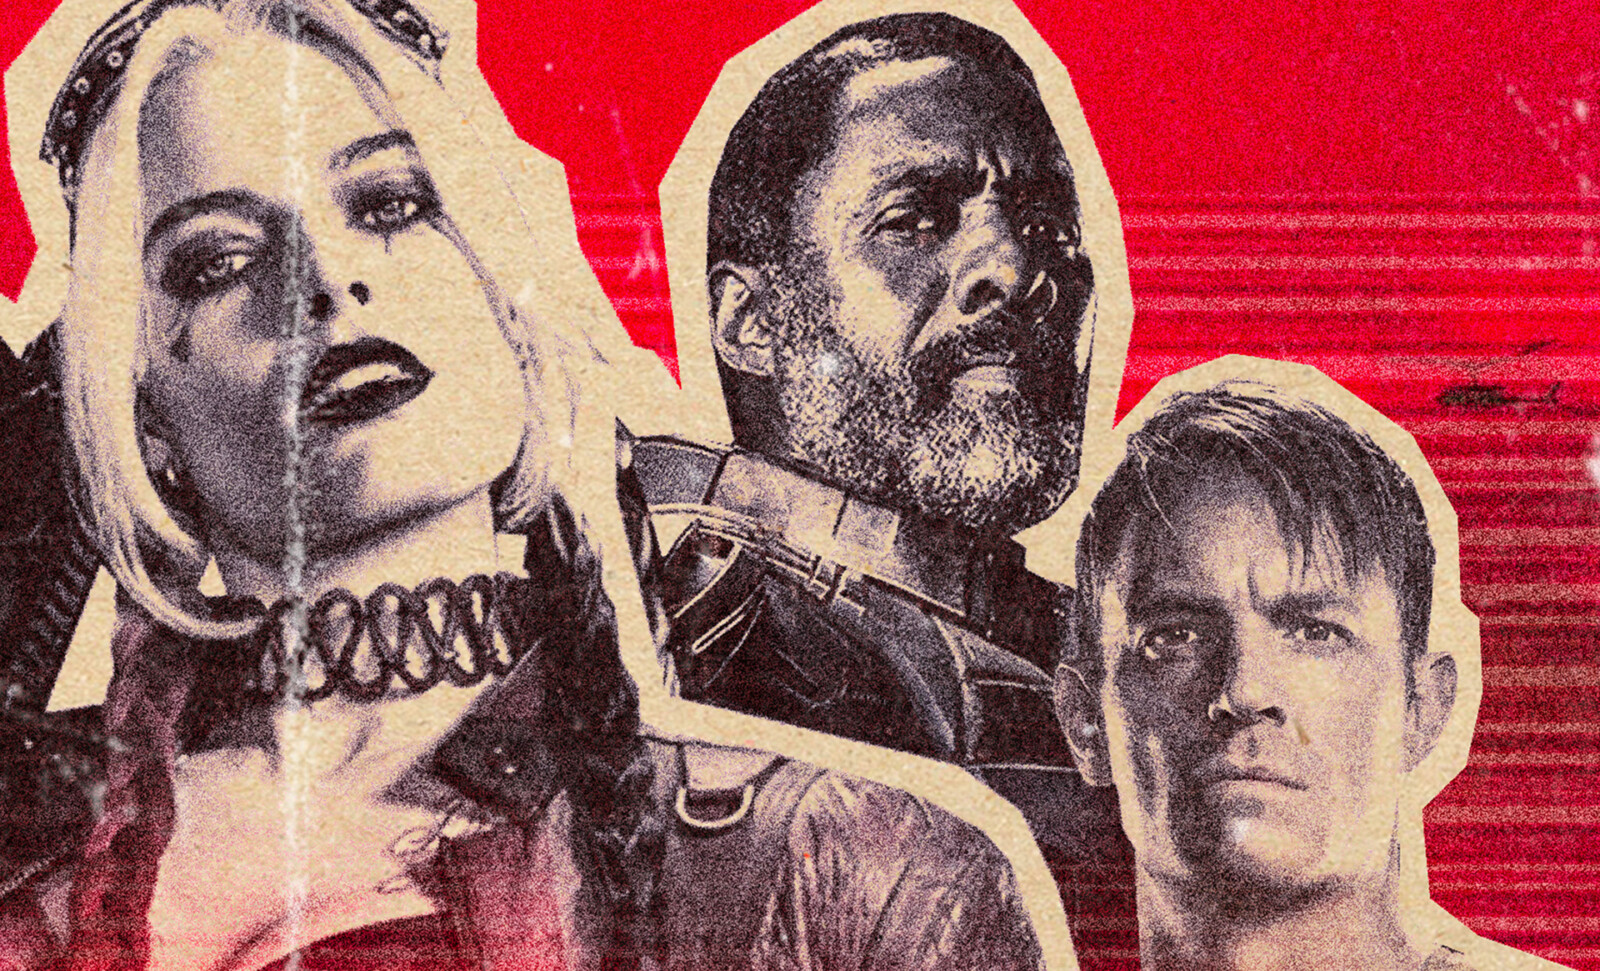 The Suicide Squad – Alternative Movie Poster